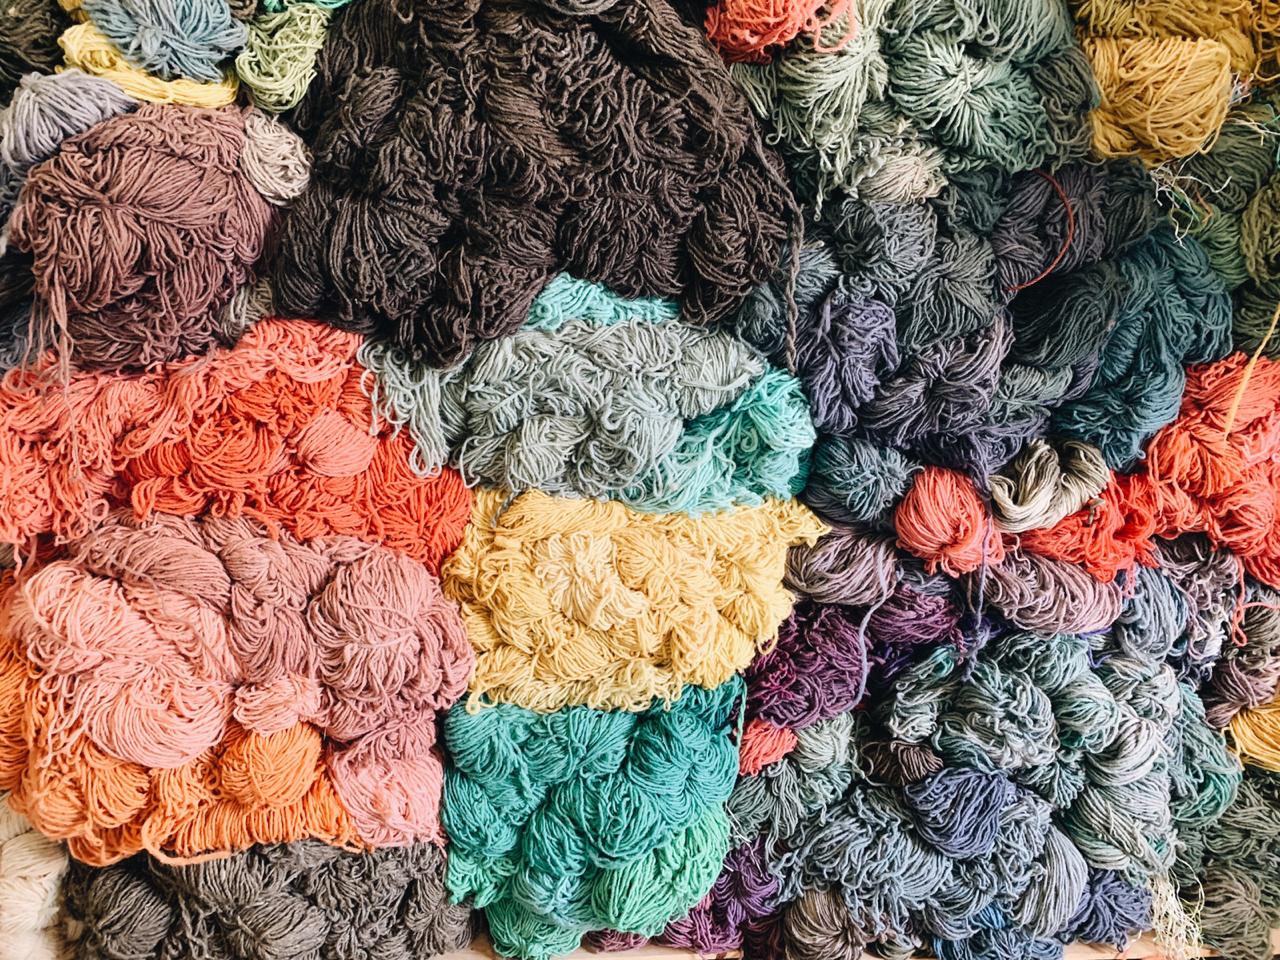 Handmade designer rugs by Illuminate Collective